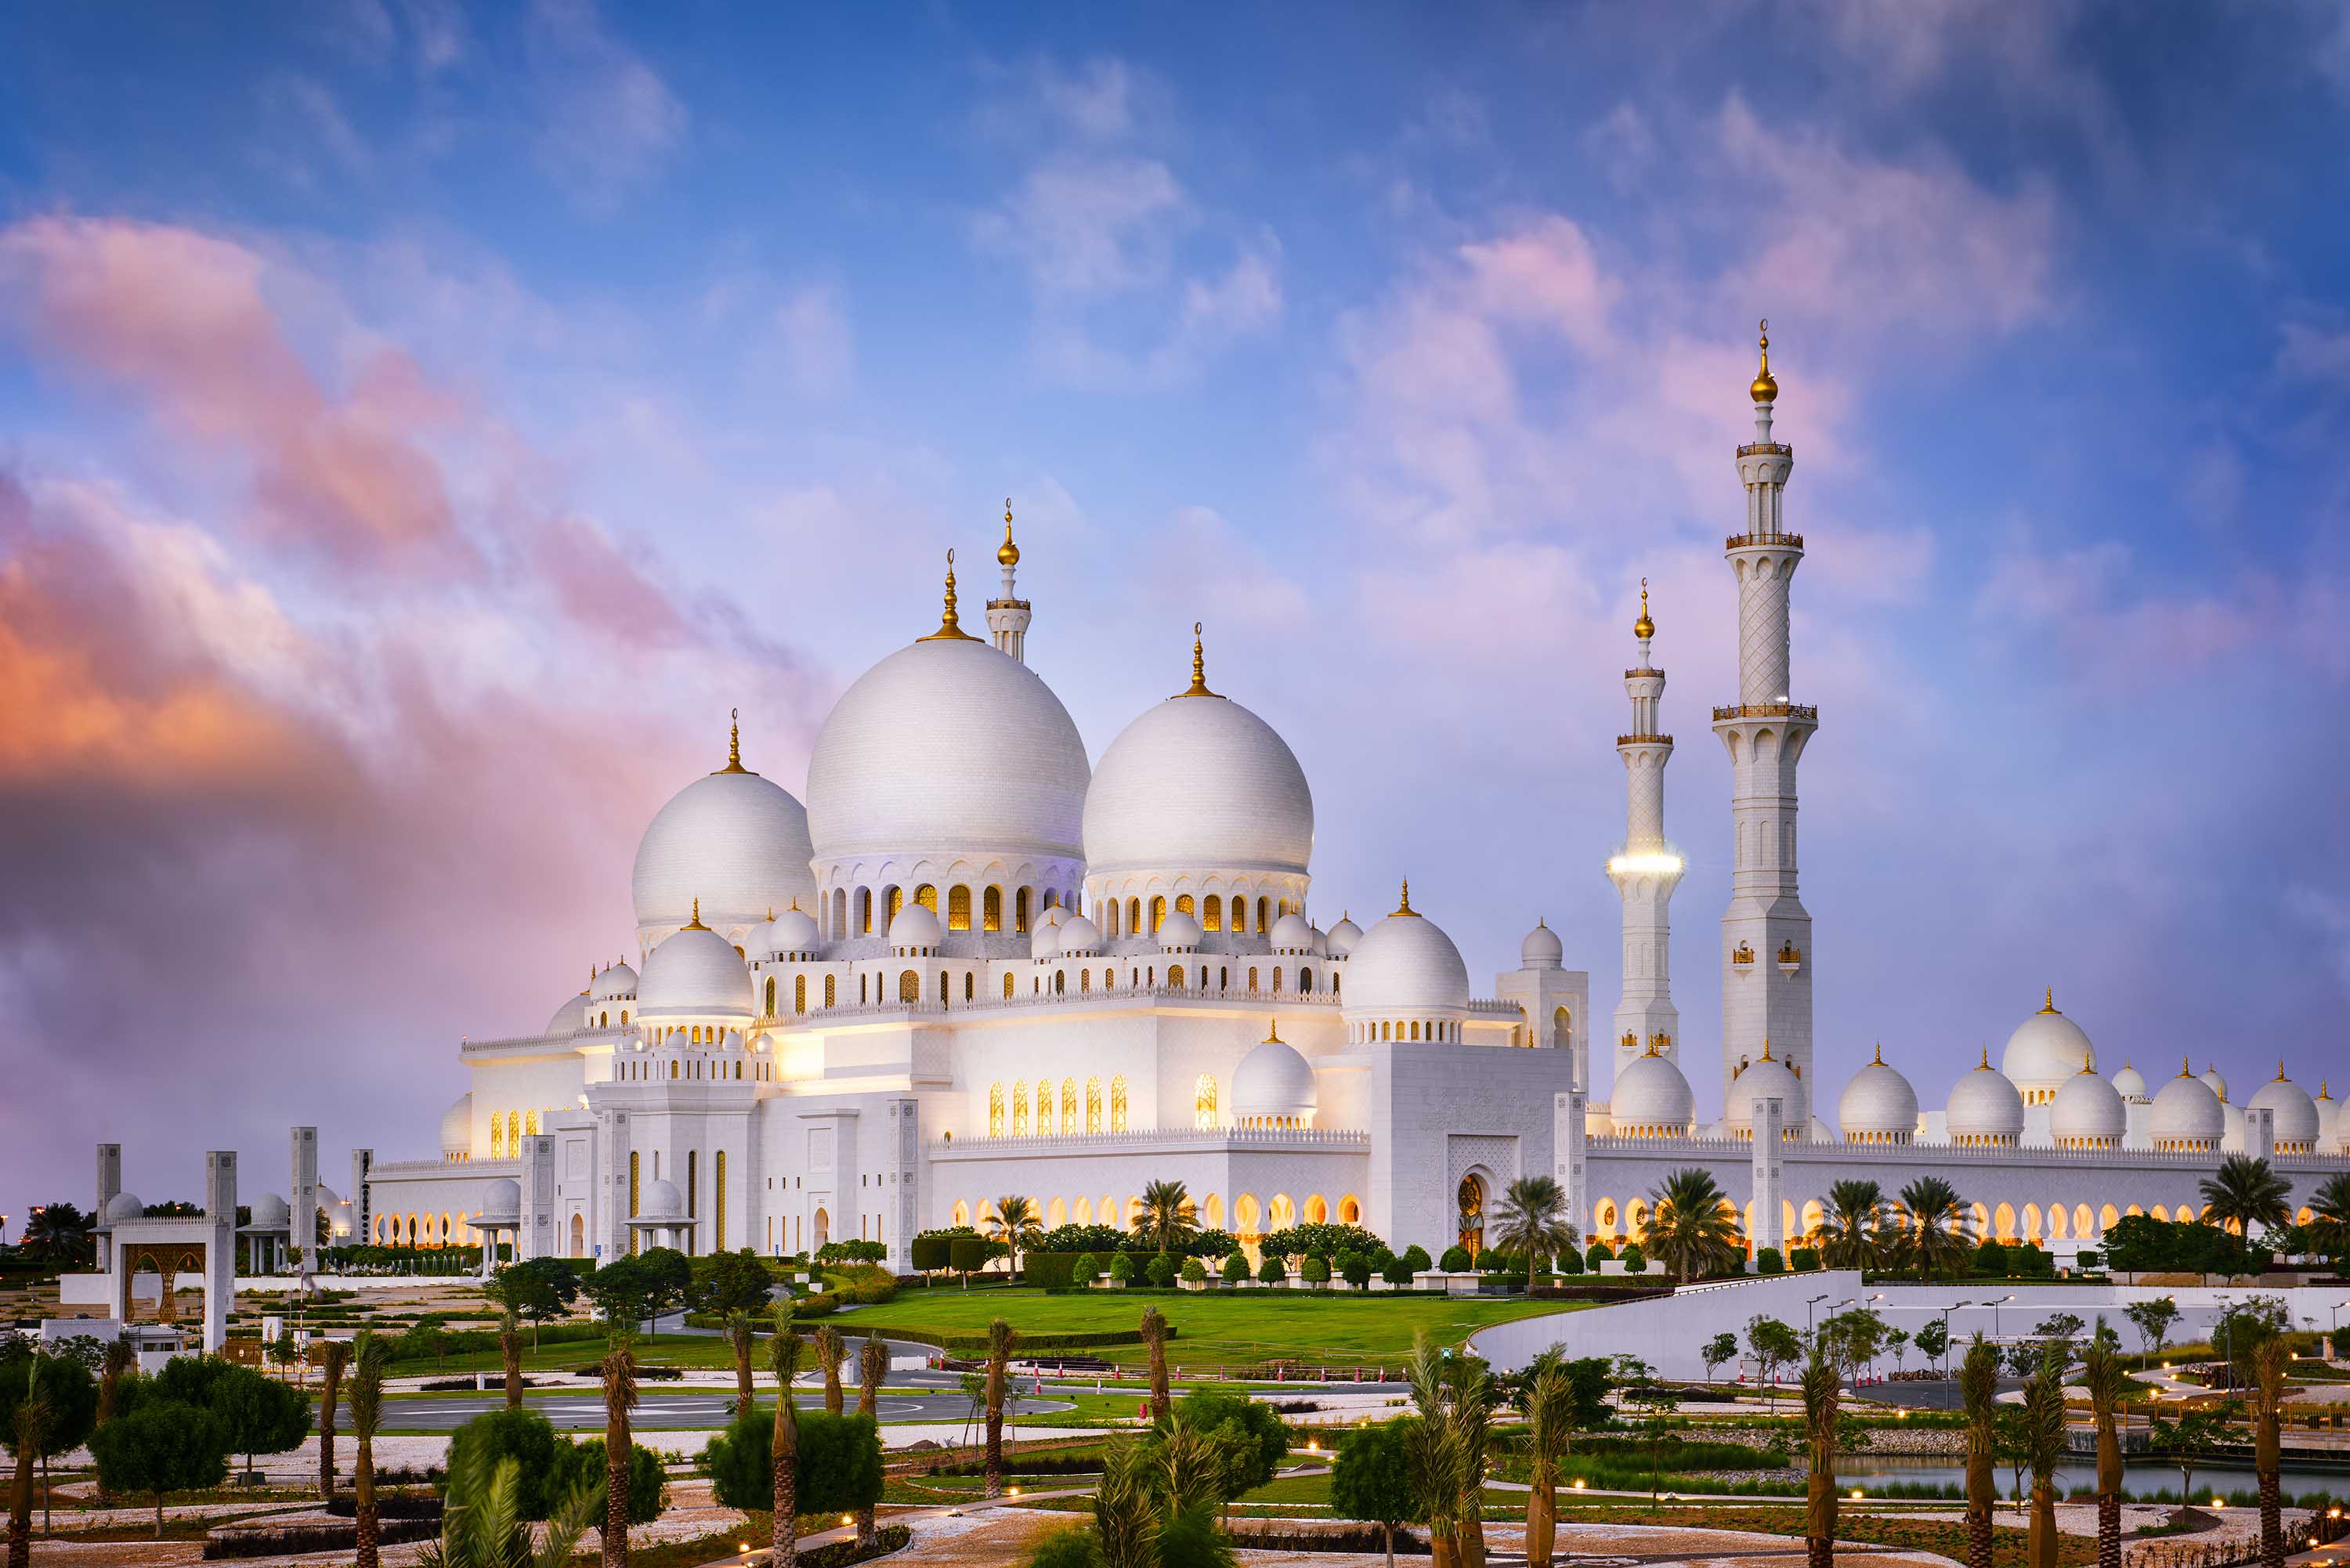 Sheikh Zayed Mosque in Abu Dhabi: Learn its secrets